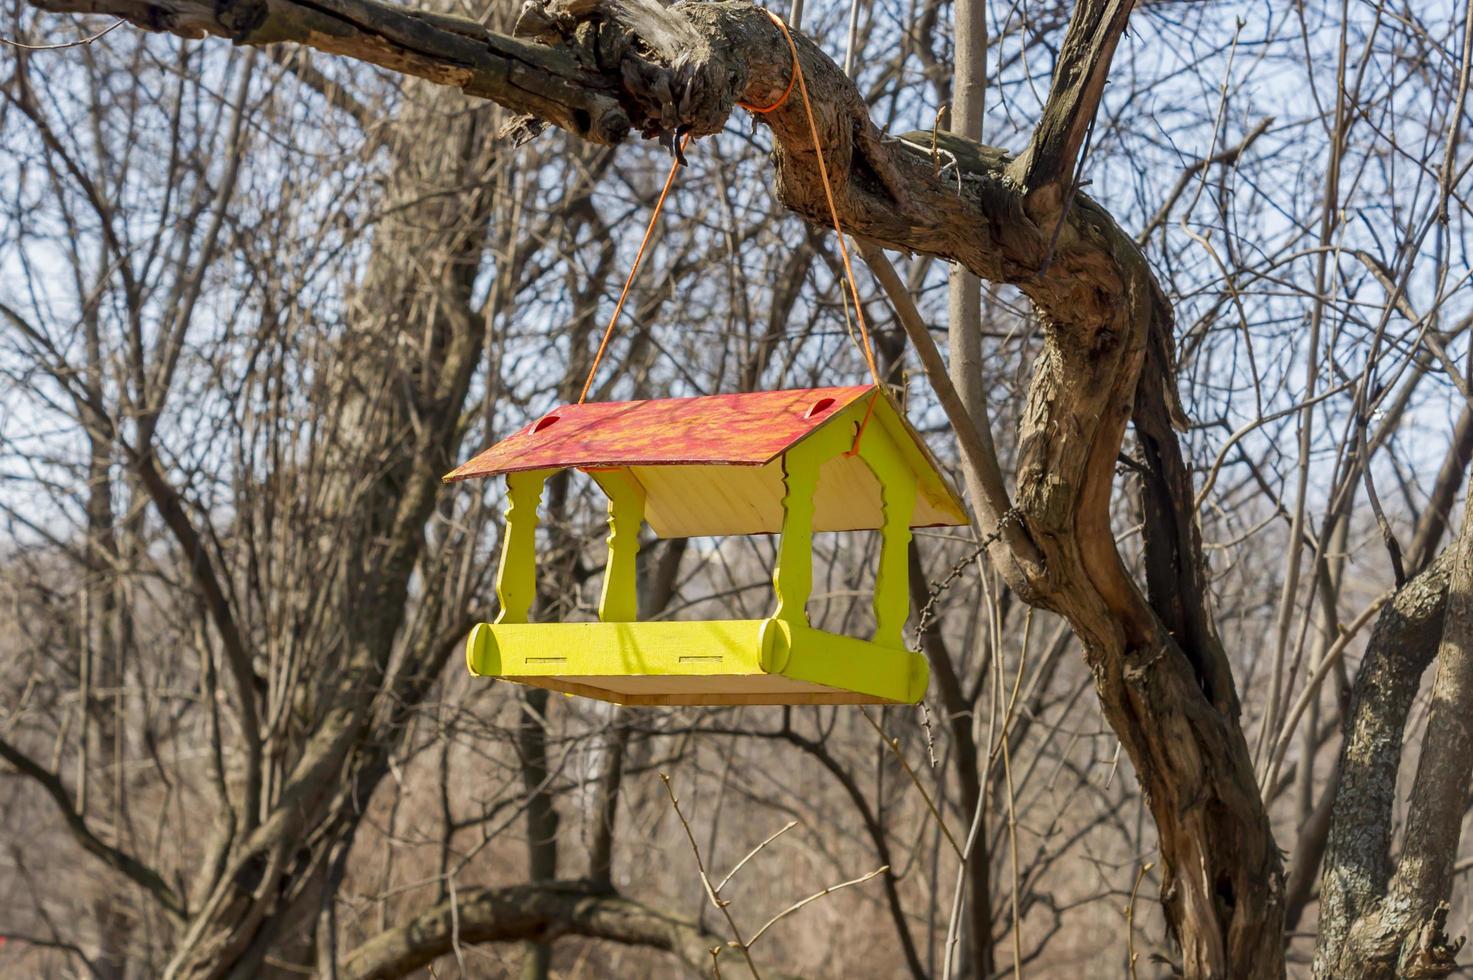 The birdhouse on a tree photo